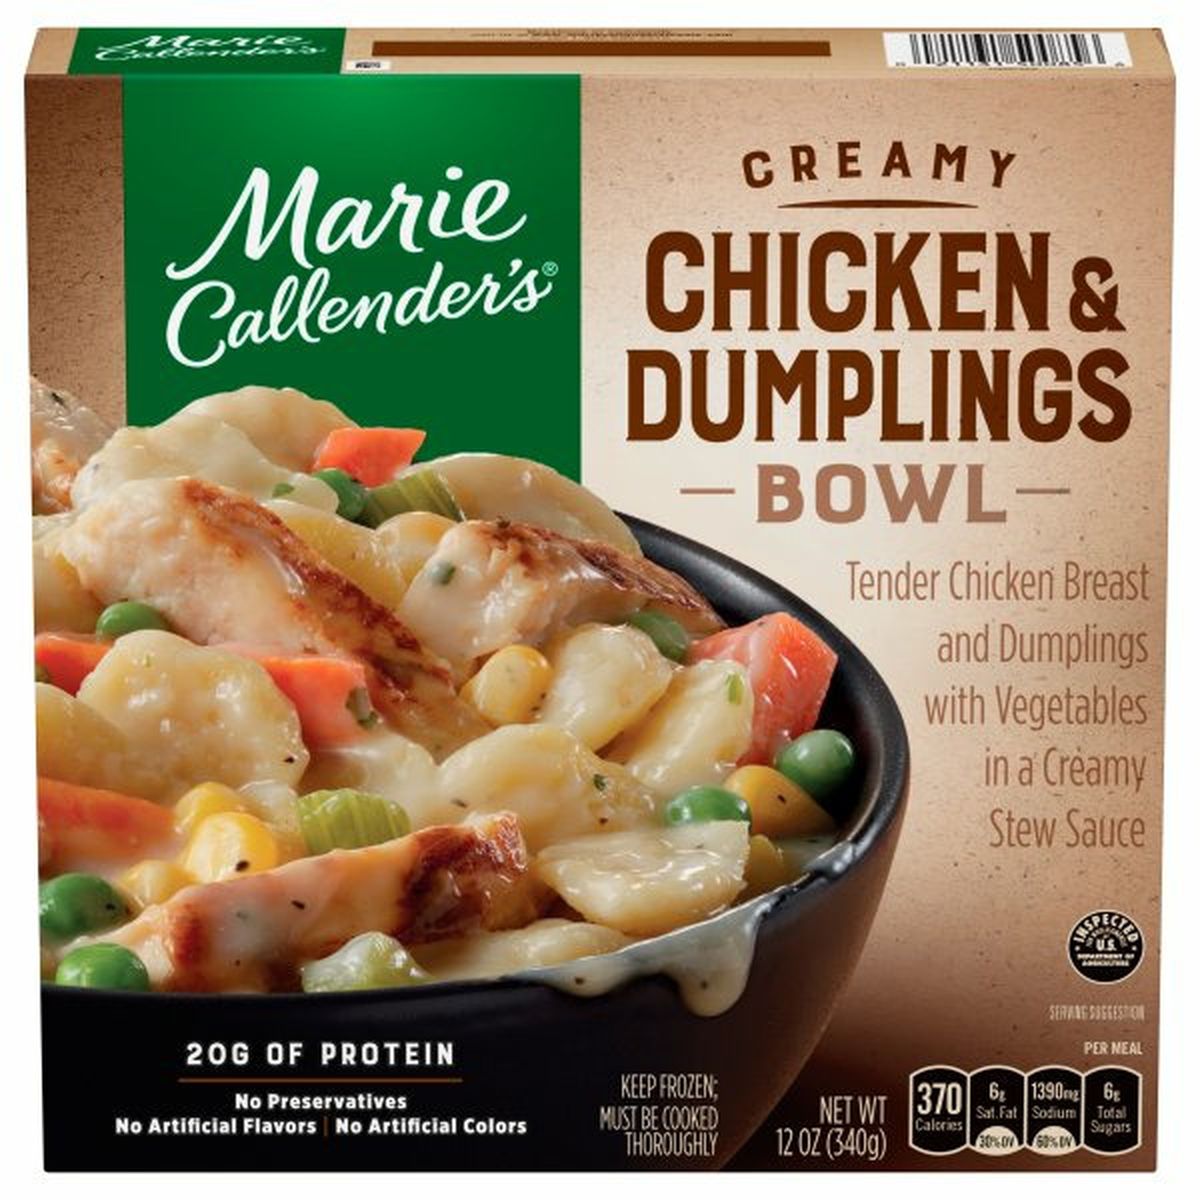 Calories in Marie Callender's Bowl, Creamy Chicken & Dumplings